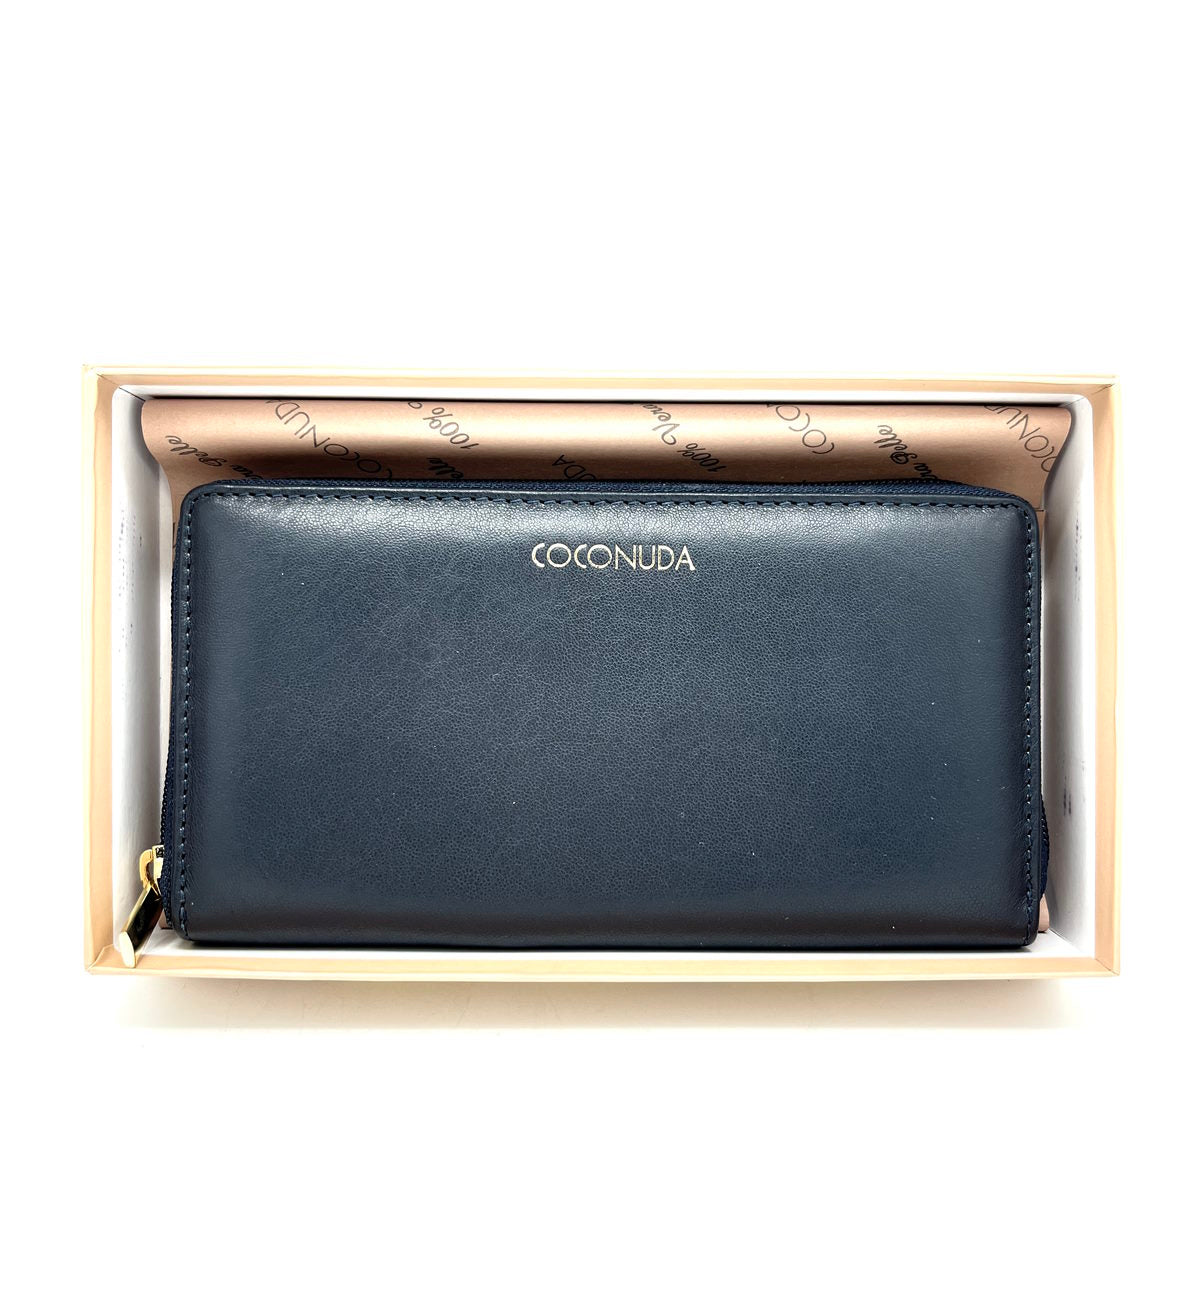 Brand Coconuda, Genuine leather wallet, art. PDK254-58.425